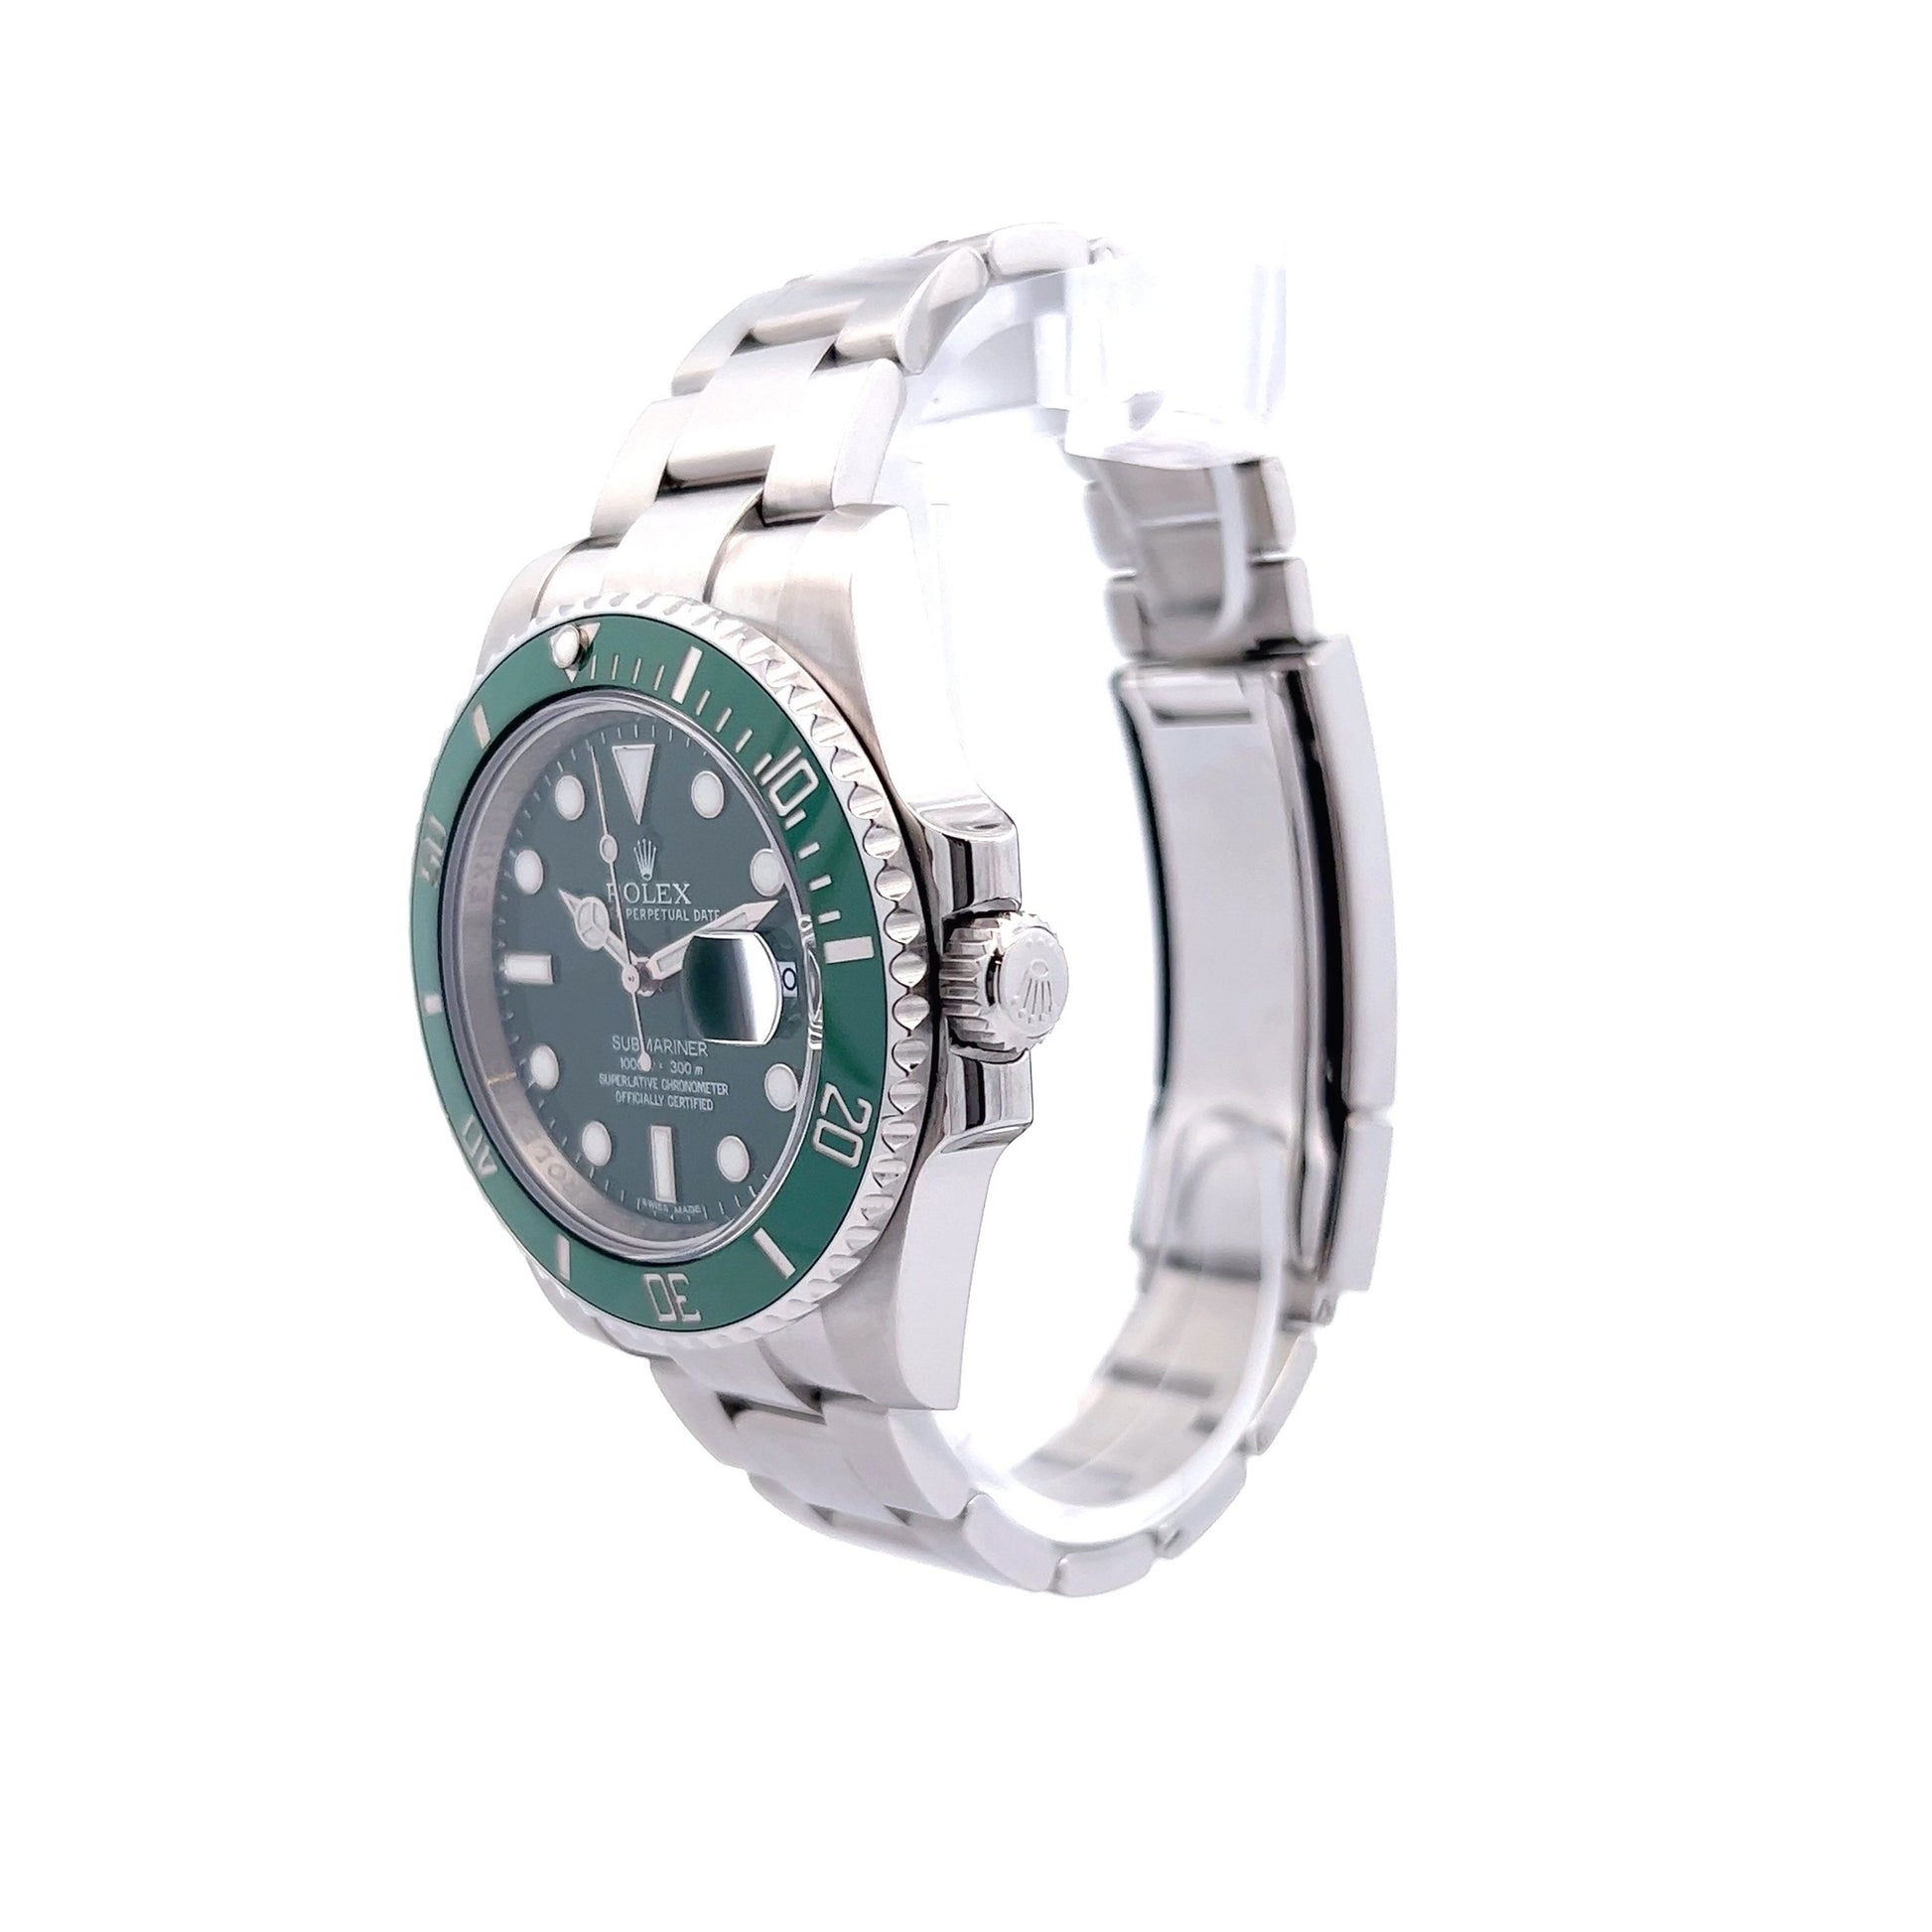 Rolex Submariner Hulk Dial Bezel Watch 116610LV